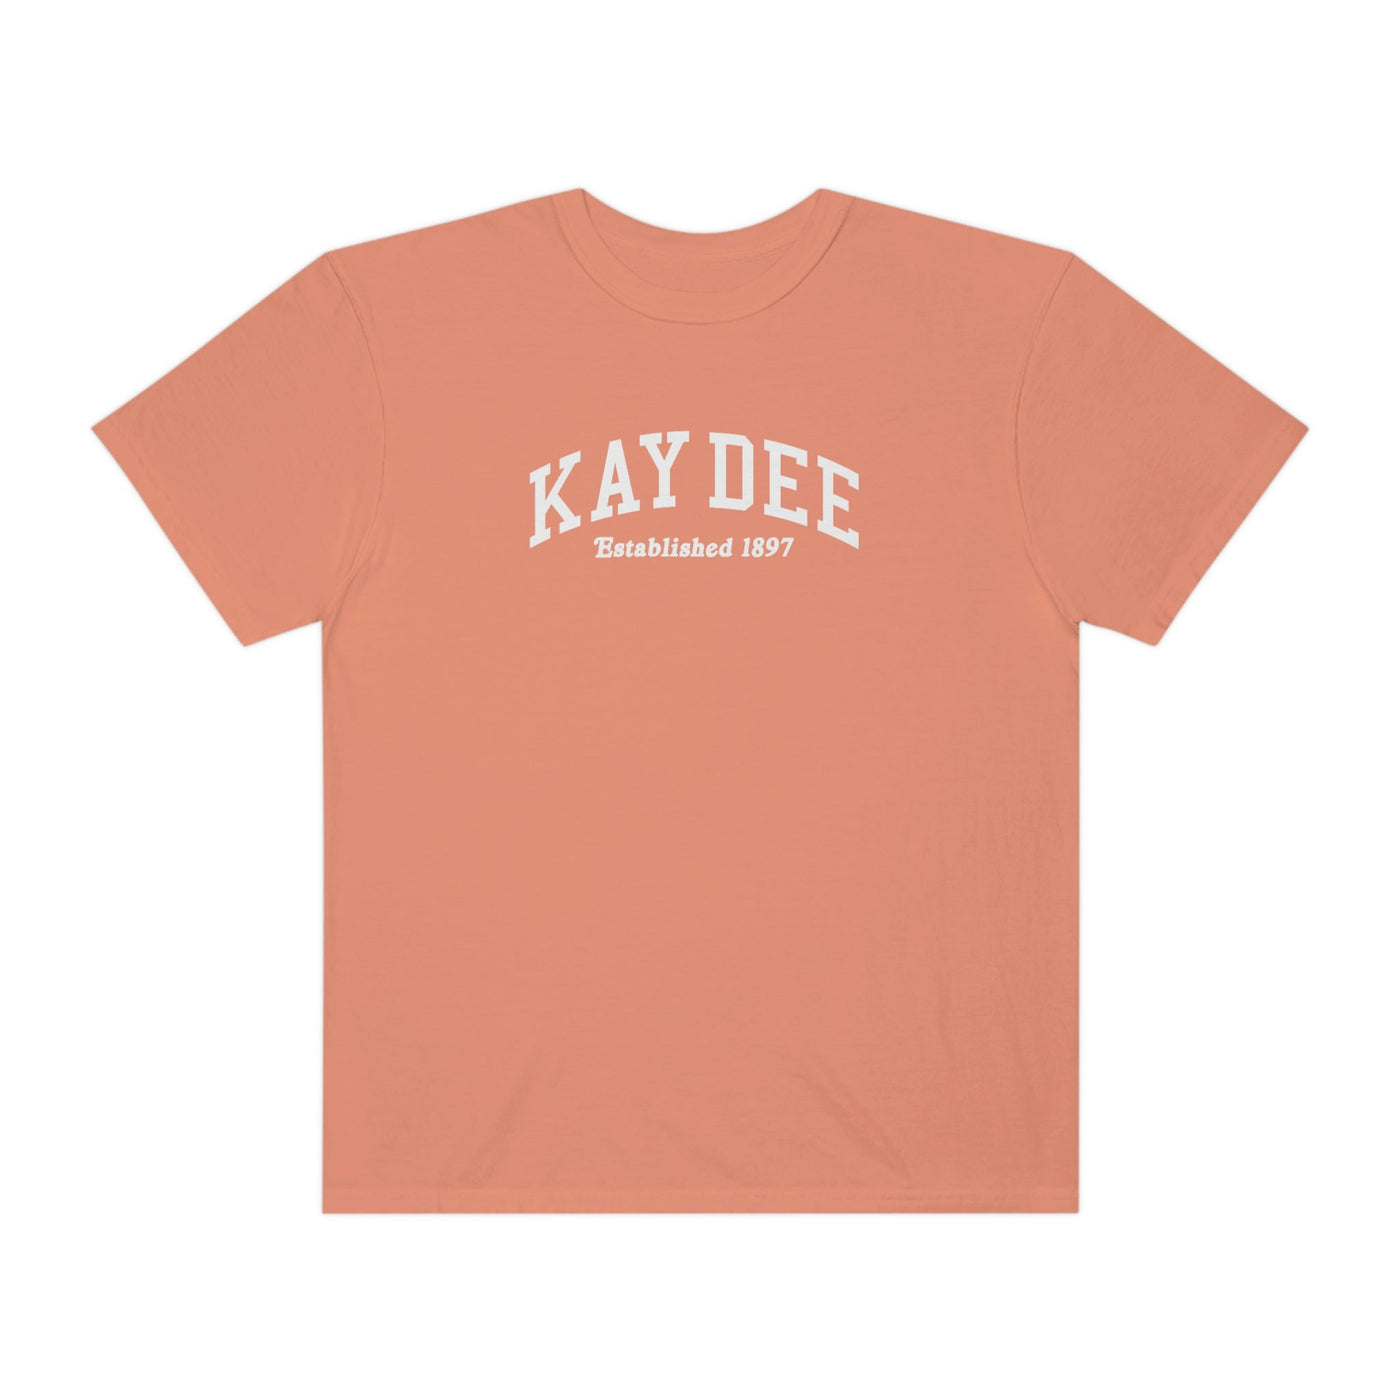 Kappa Delta Varsity College Sorority Comfy T-Shirt